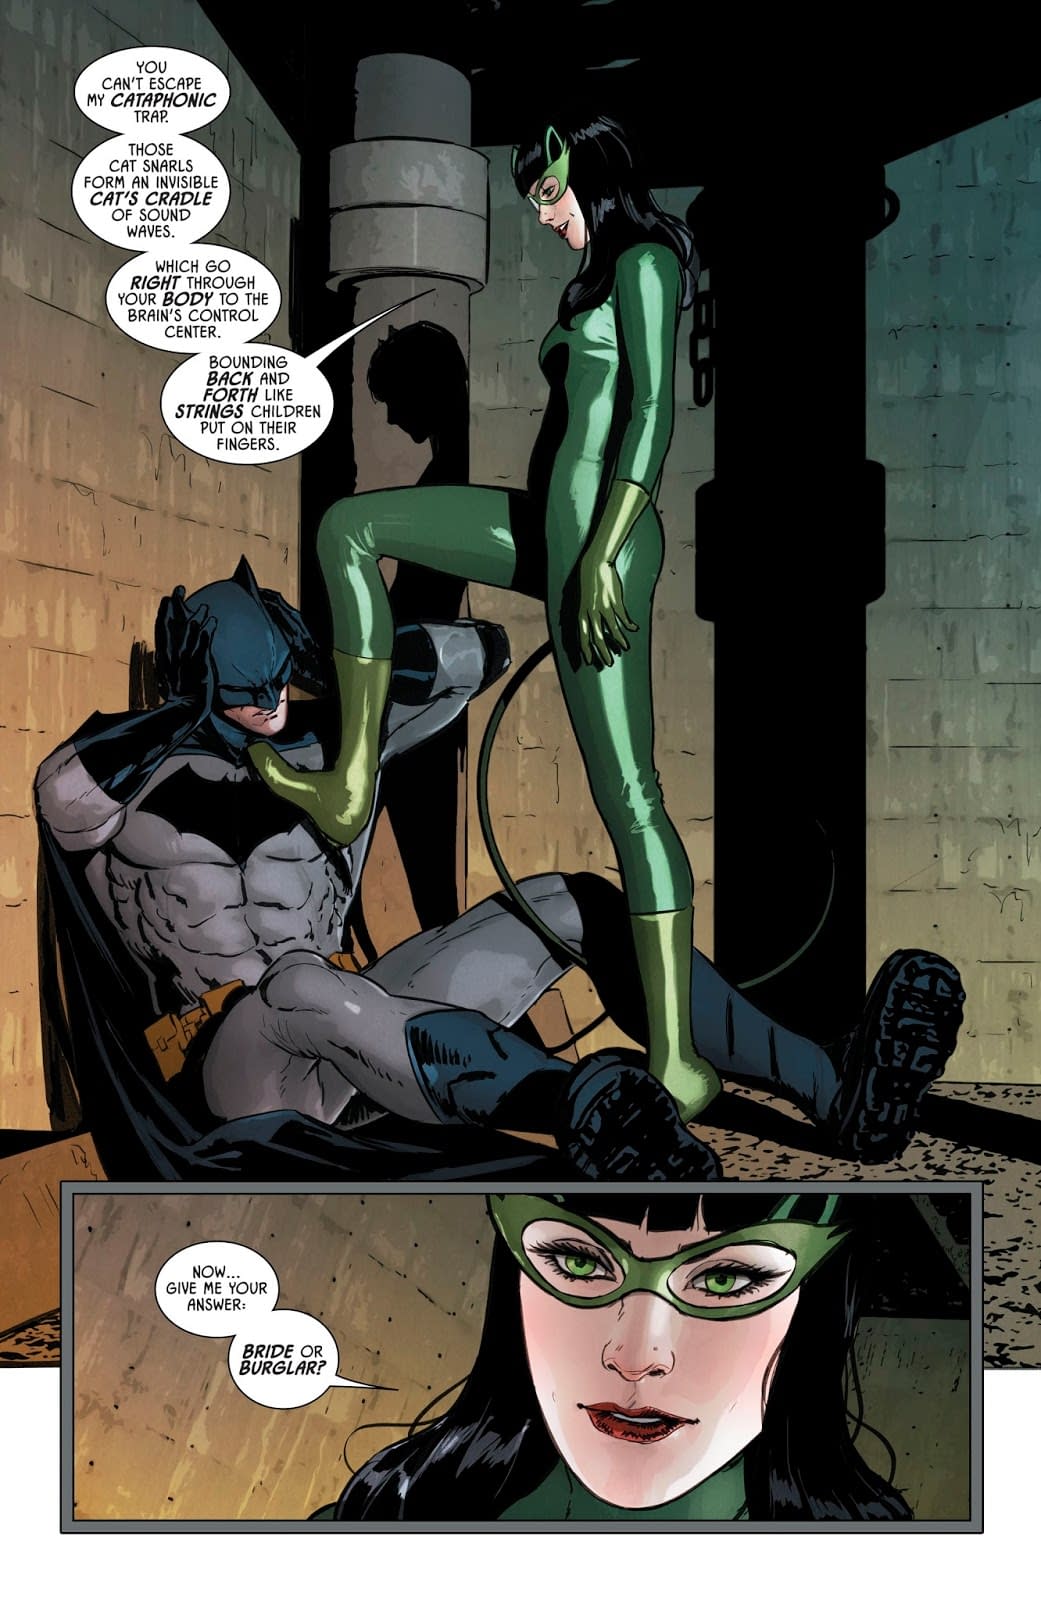 Batman spanks catwoman